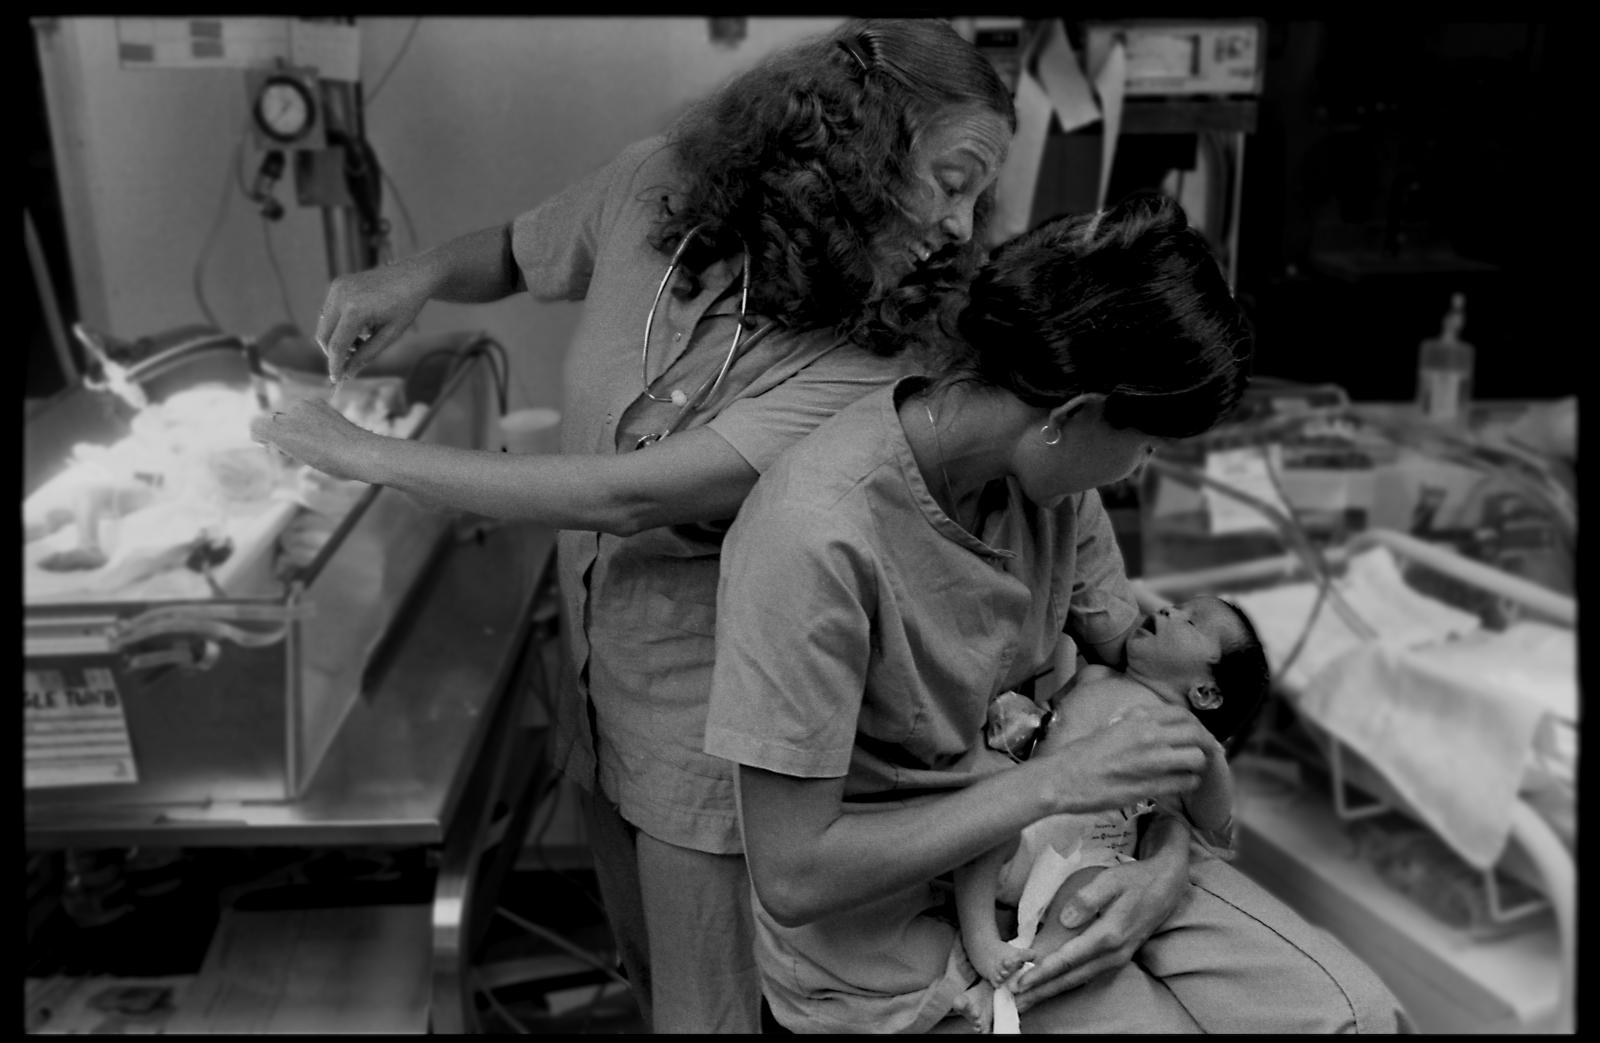 Besides physical care giving, nurses on Neonatal Intensive Care Unit (NICU) often show tenderness. University of Arizona Health Science Center NICU. Tucson, AZ, USA.